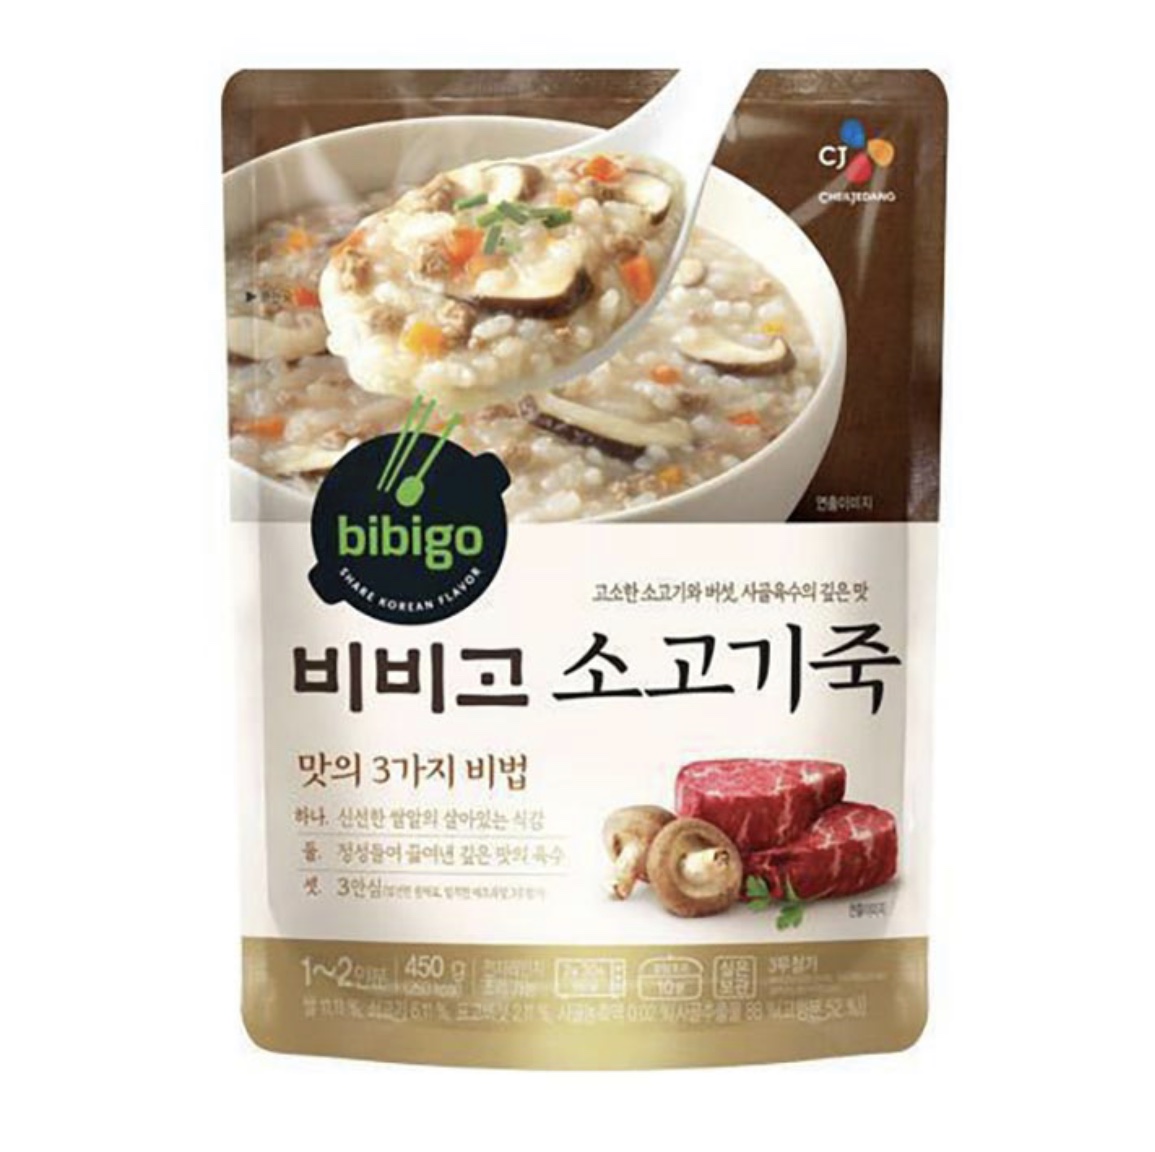 [Original] 비비고소고기죽 CJ bibigo Beef Porridge (ข้าวต้มเนื้อวัวปรุงสำเร็จรูป) 450g